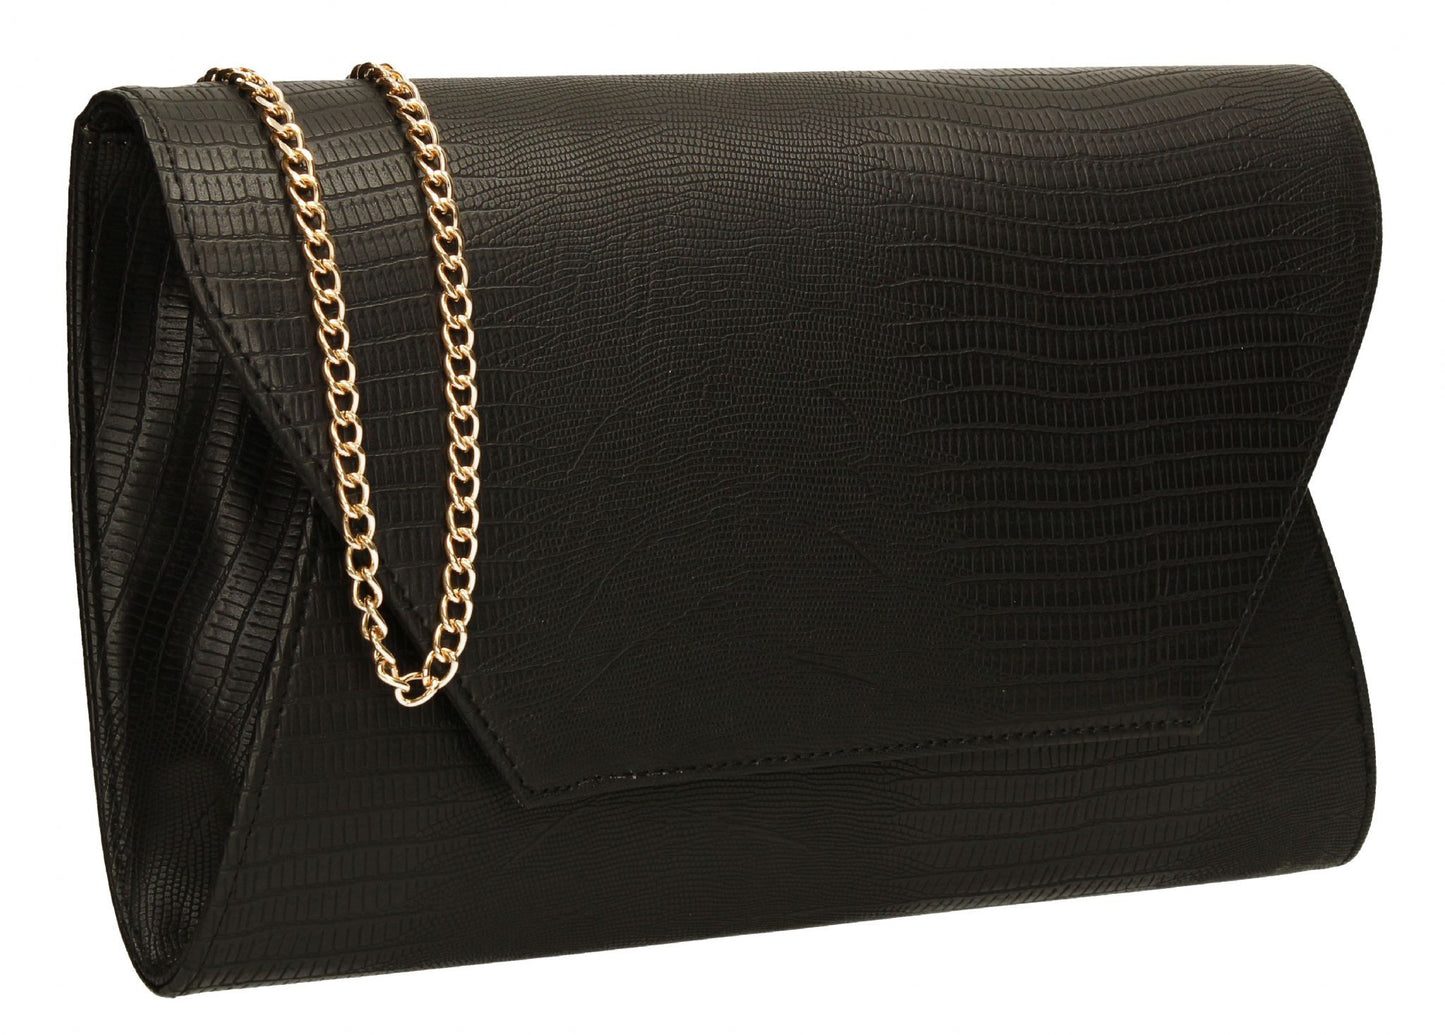 SWANKYSWANS Tania Clutch Bag Black Cute Cheap Clutch Bag For Weddings School and Work